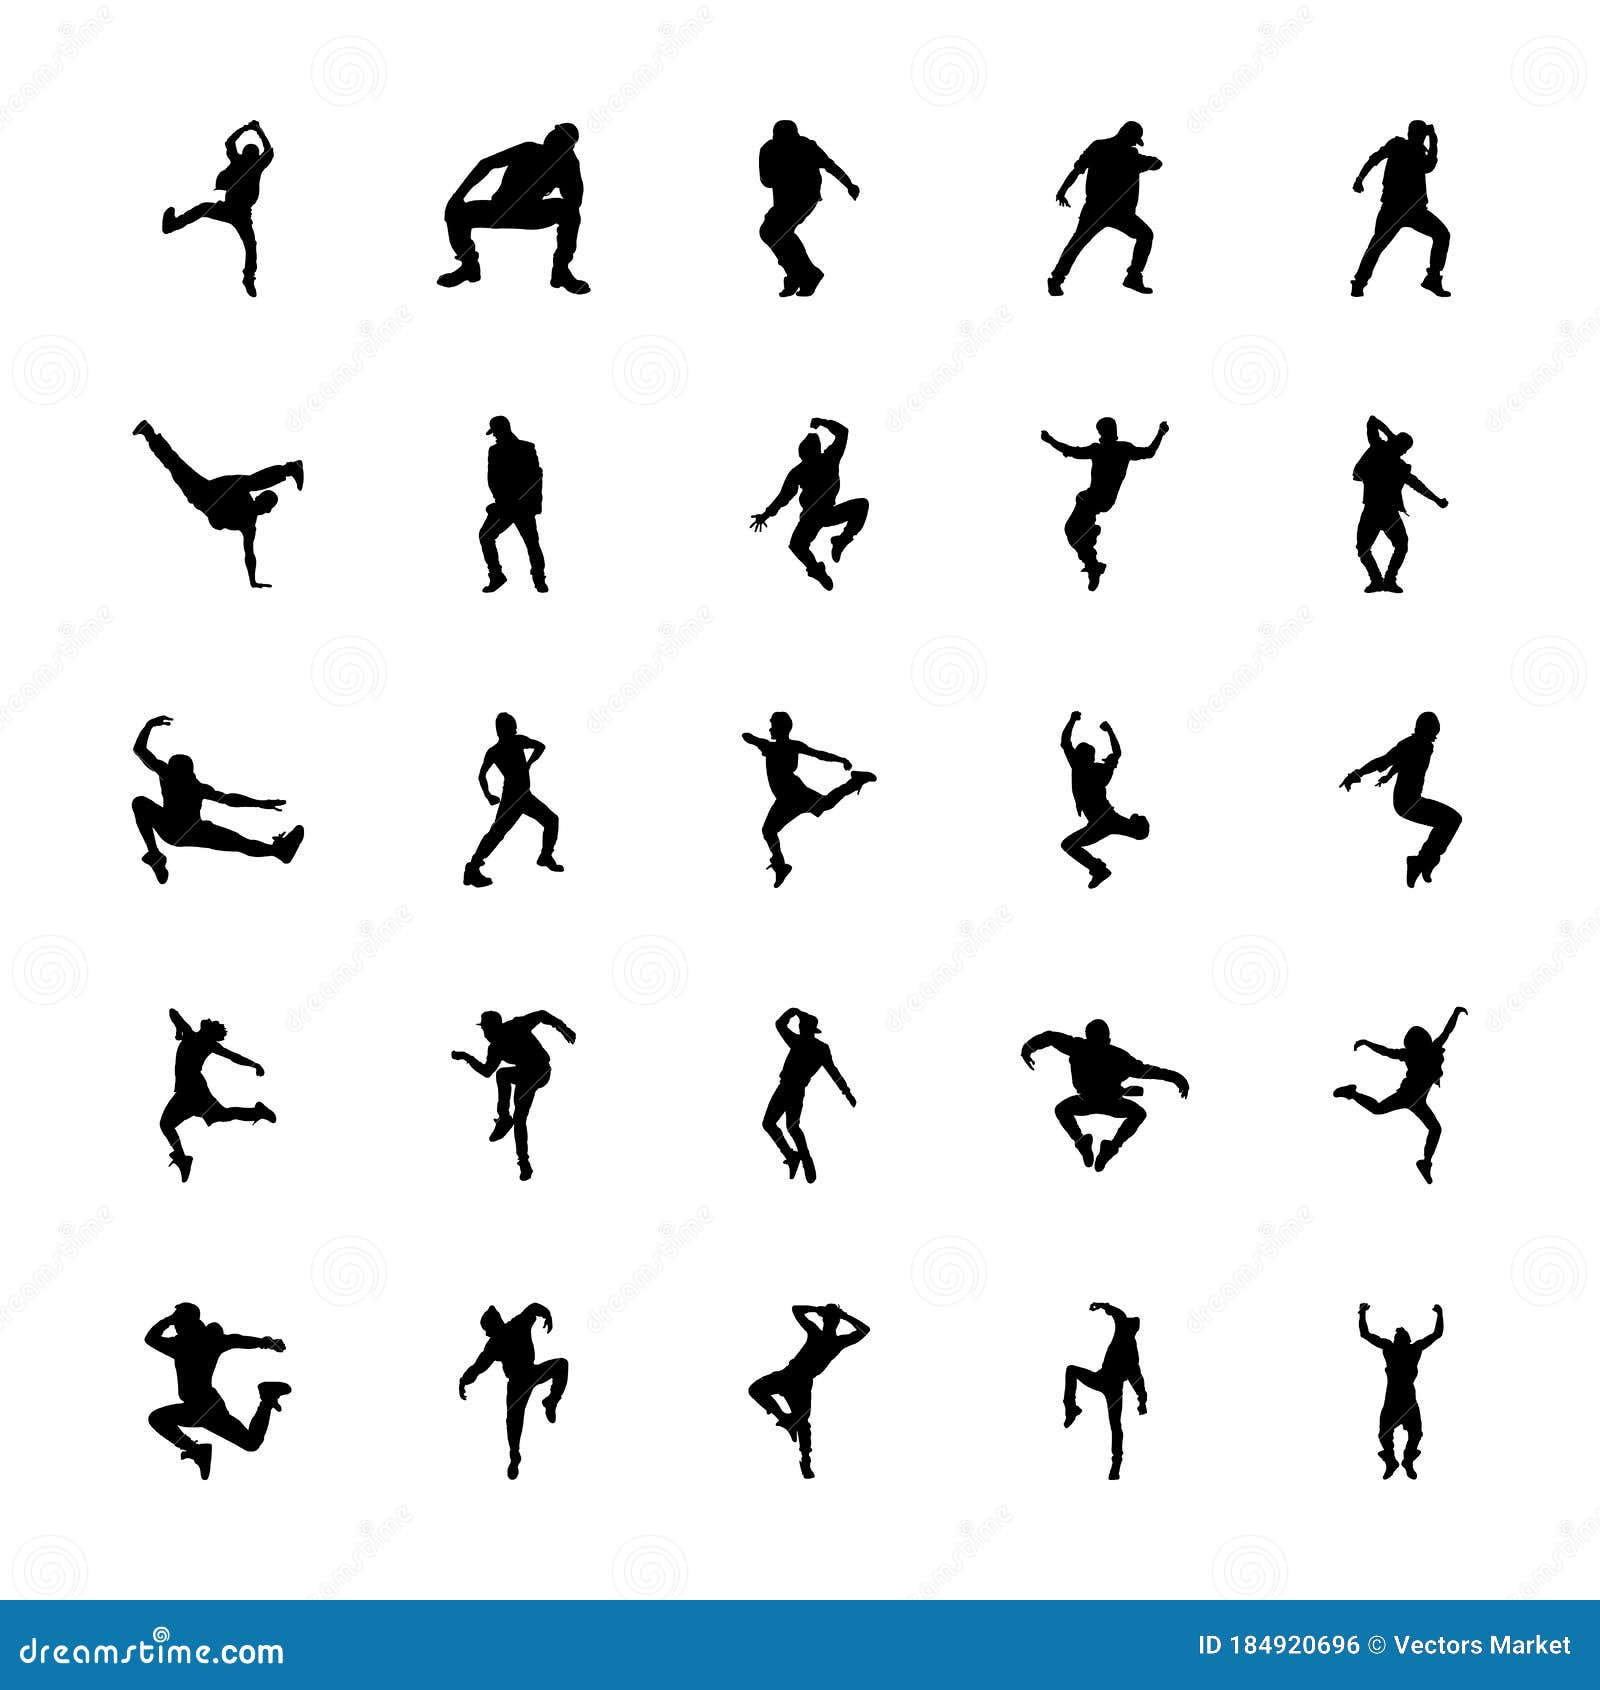 Sports Silhouettes Icons Set Stock Vector - Illustration of avatars ...